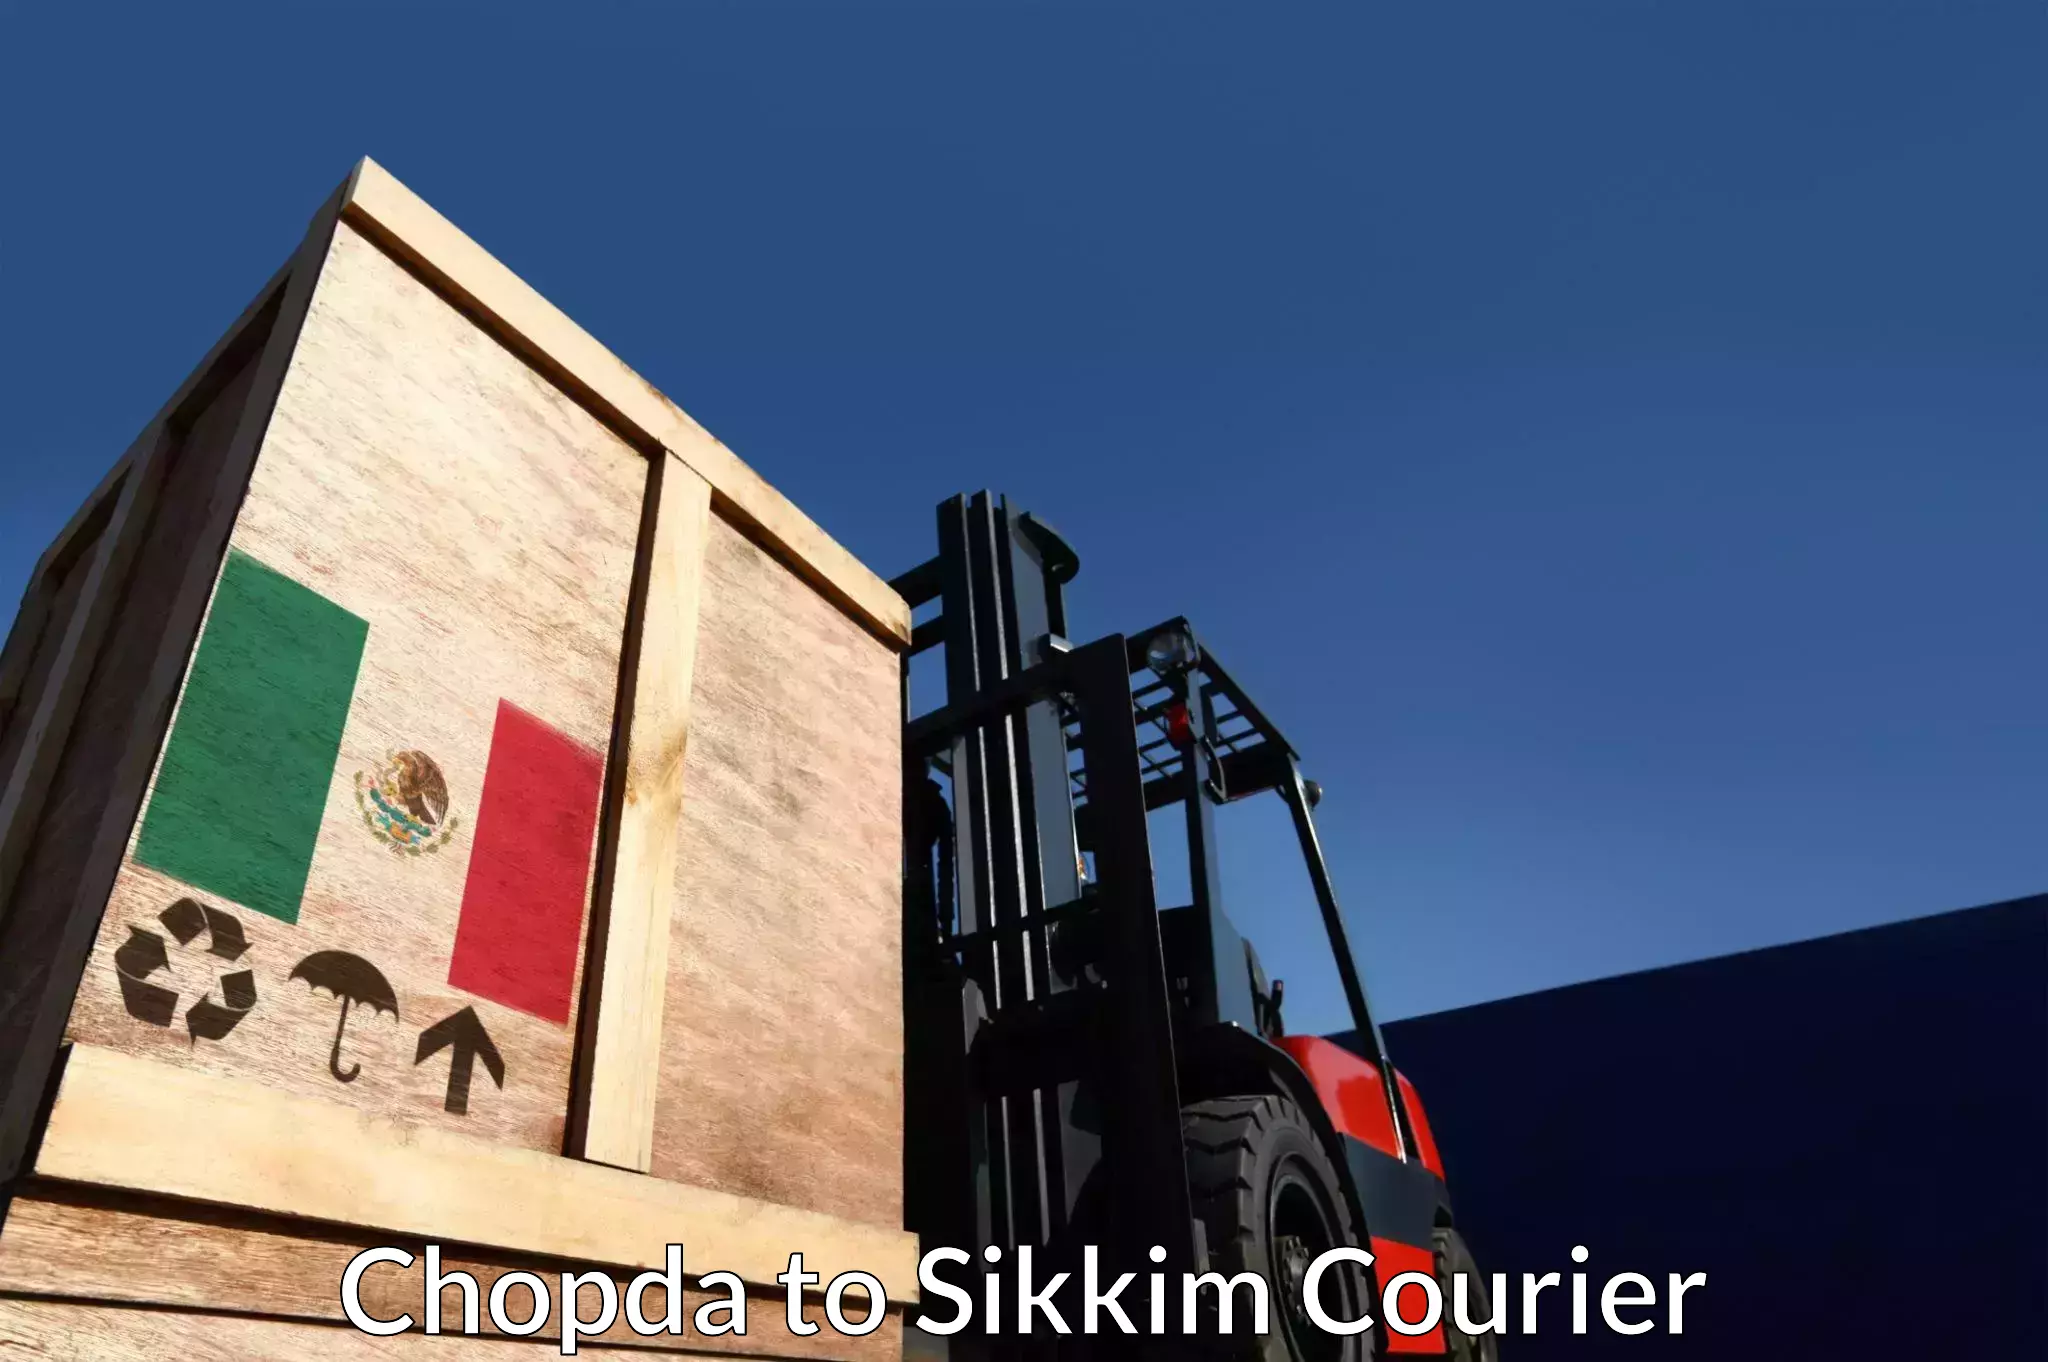 Courier service comparison Chopda to North Sikkim